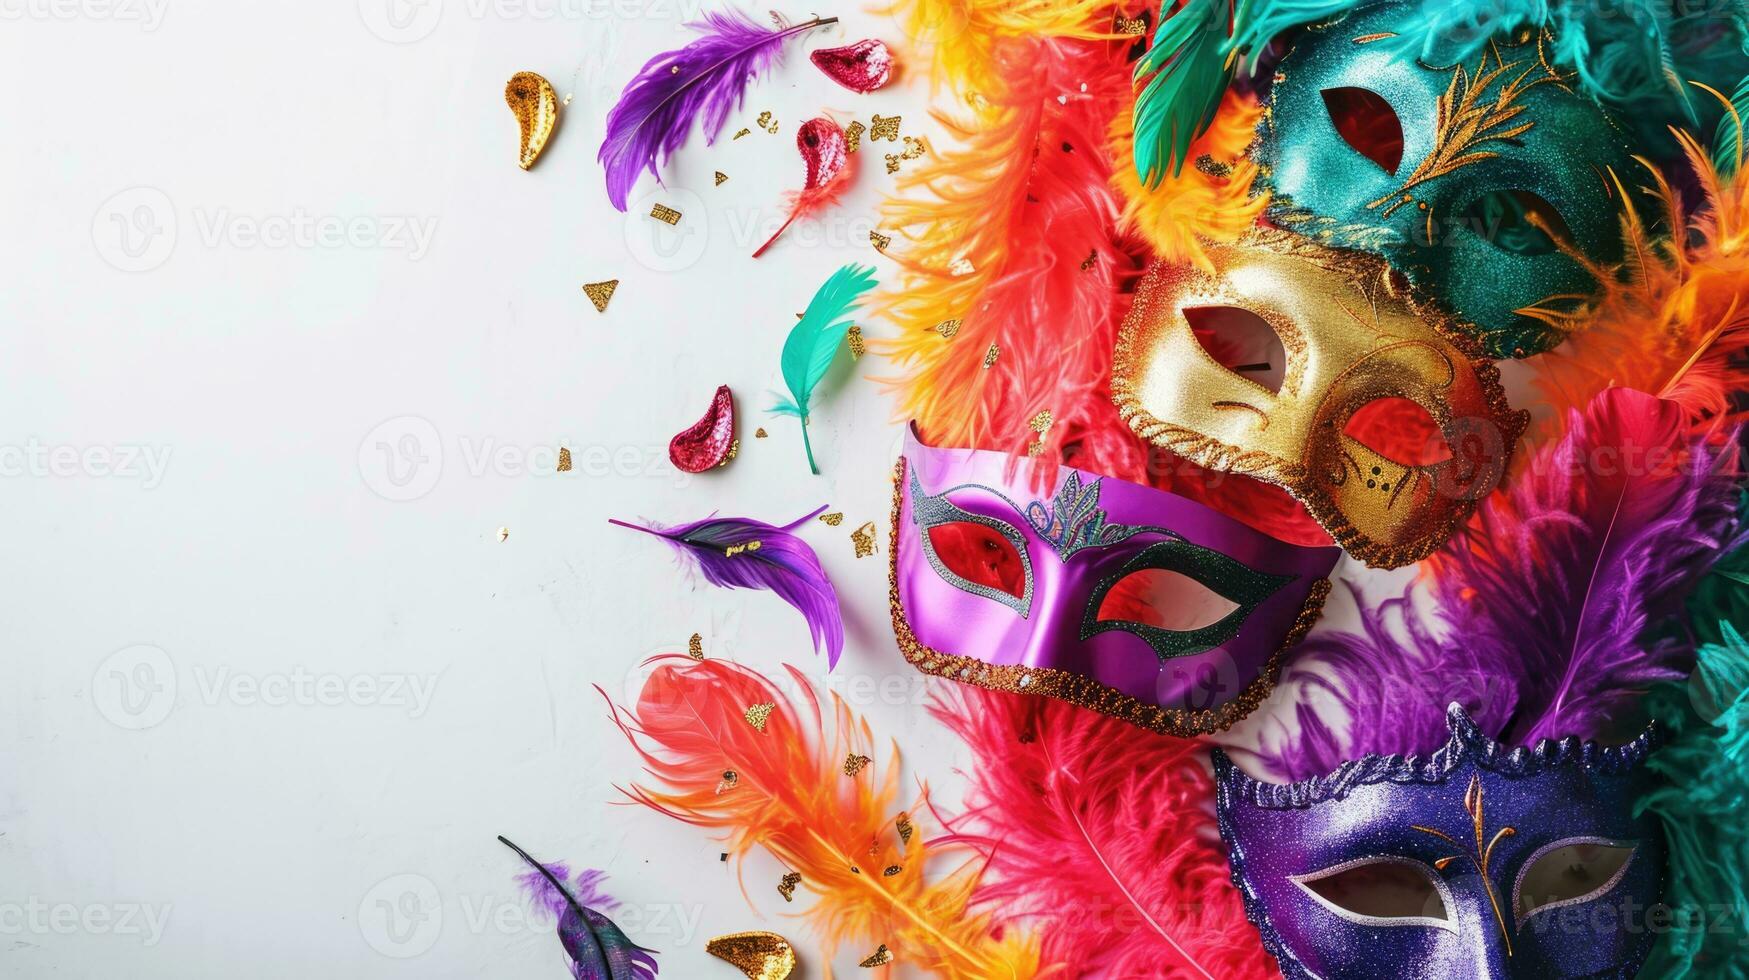 ai generado mardi gras carnaval vistoso plumas y mascaras en un festivo celebracion cultural extravagancia, florido creando un jubiloso, festivo tradicional traer vida a un celebracion, blanco antecedentes foto